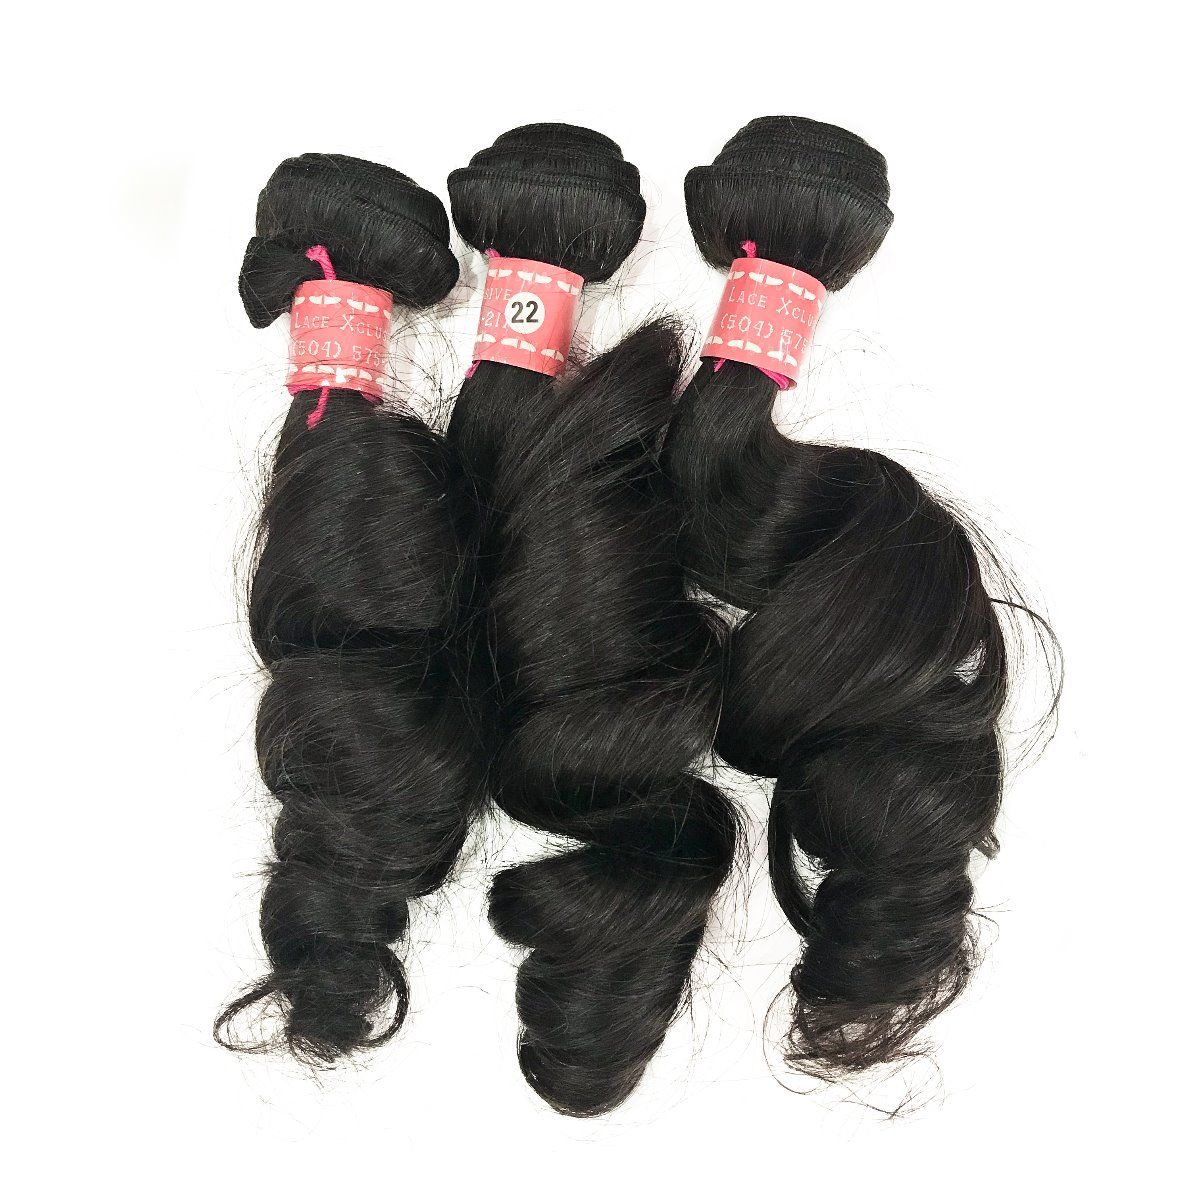 Triple Threat Virgin Peruvian Remy Natural Wave Hair (3 Bundles) - Lace Xclusive Virgin Hair